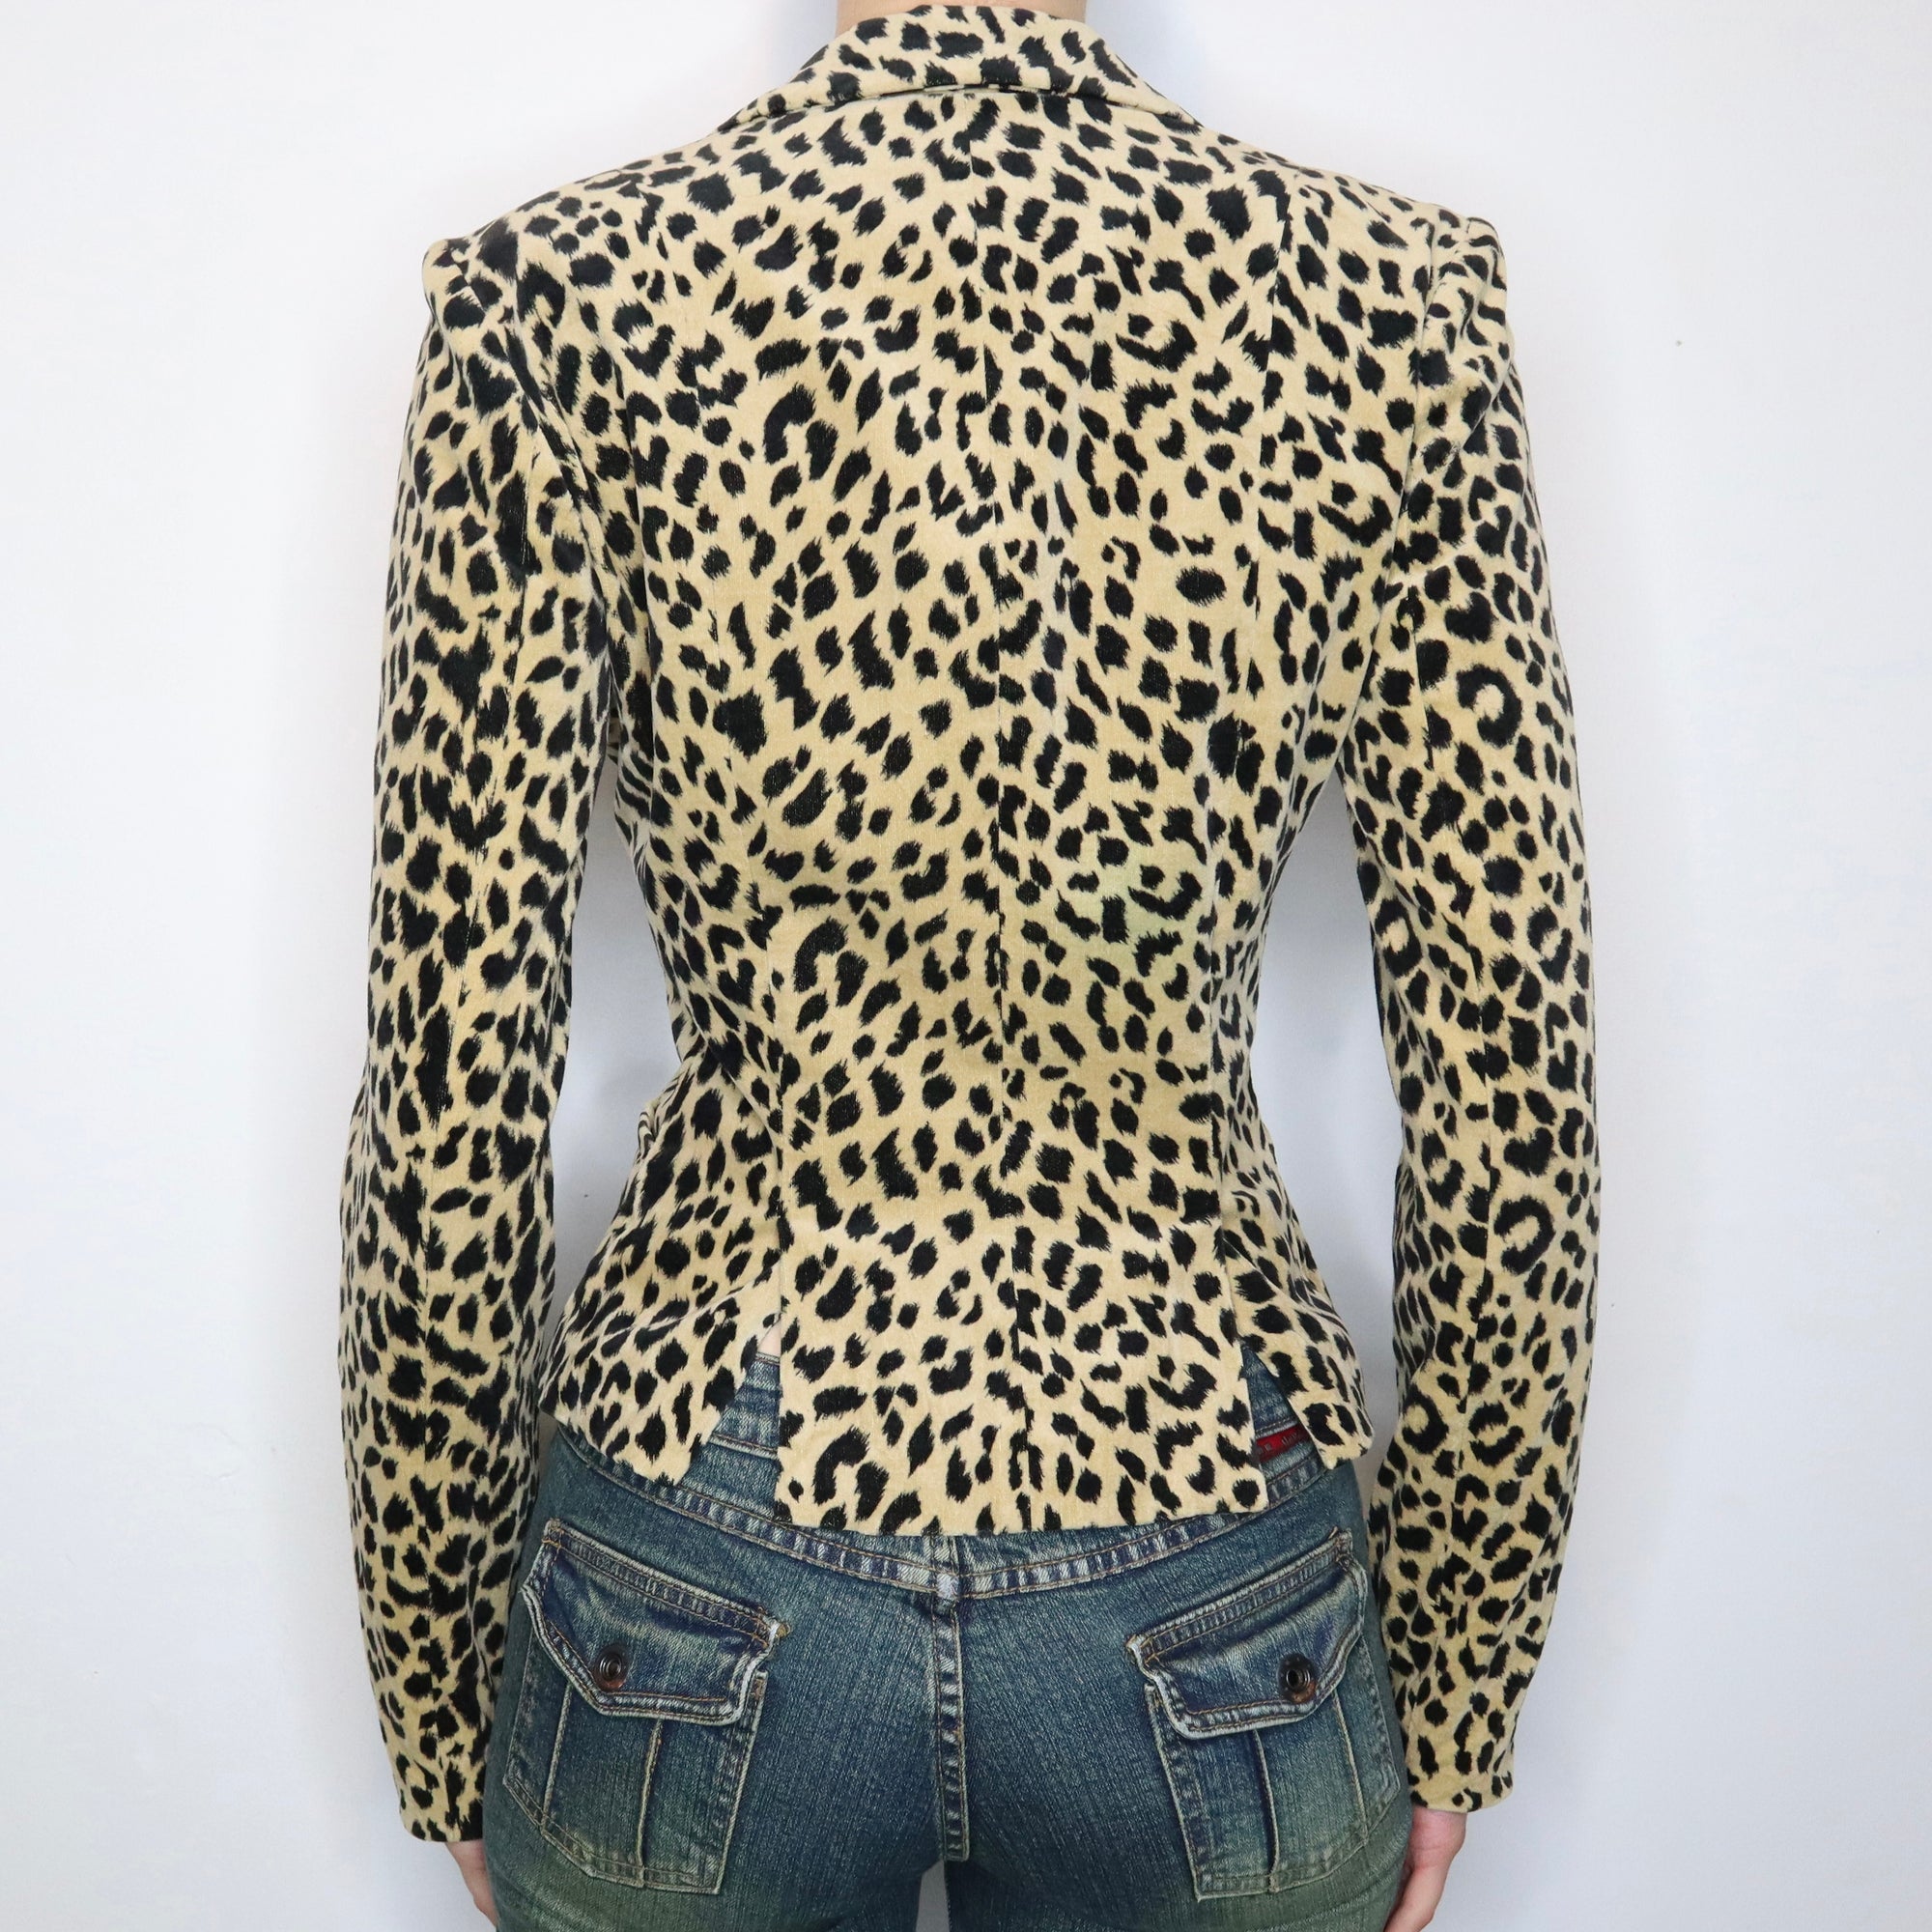 Betsey Johnson Cheetah Print Blazer (S-M)